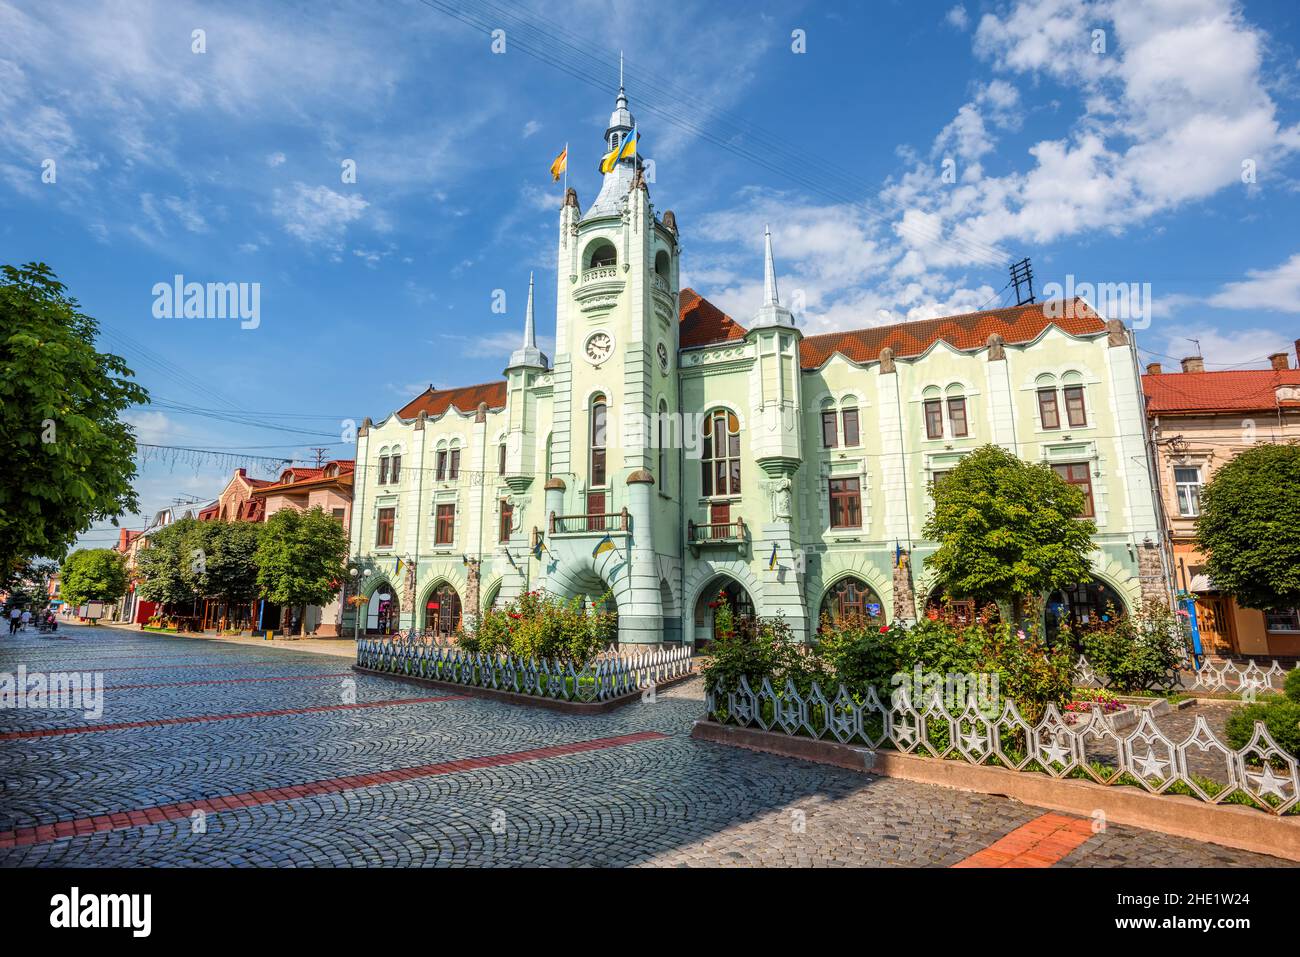 Neo-gothic historical Town Hall is the main landmark in Mukachevo Old town, west Ukraine Stock Photo